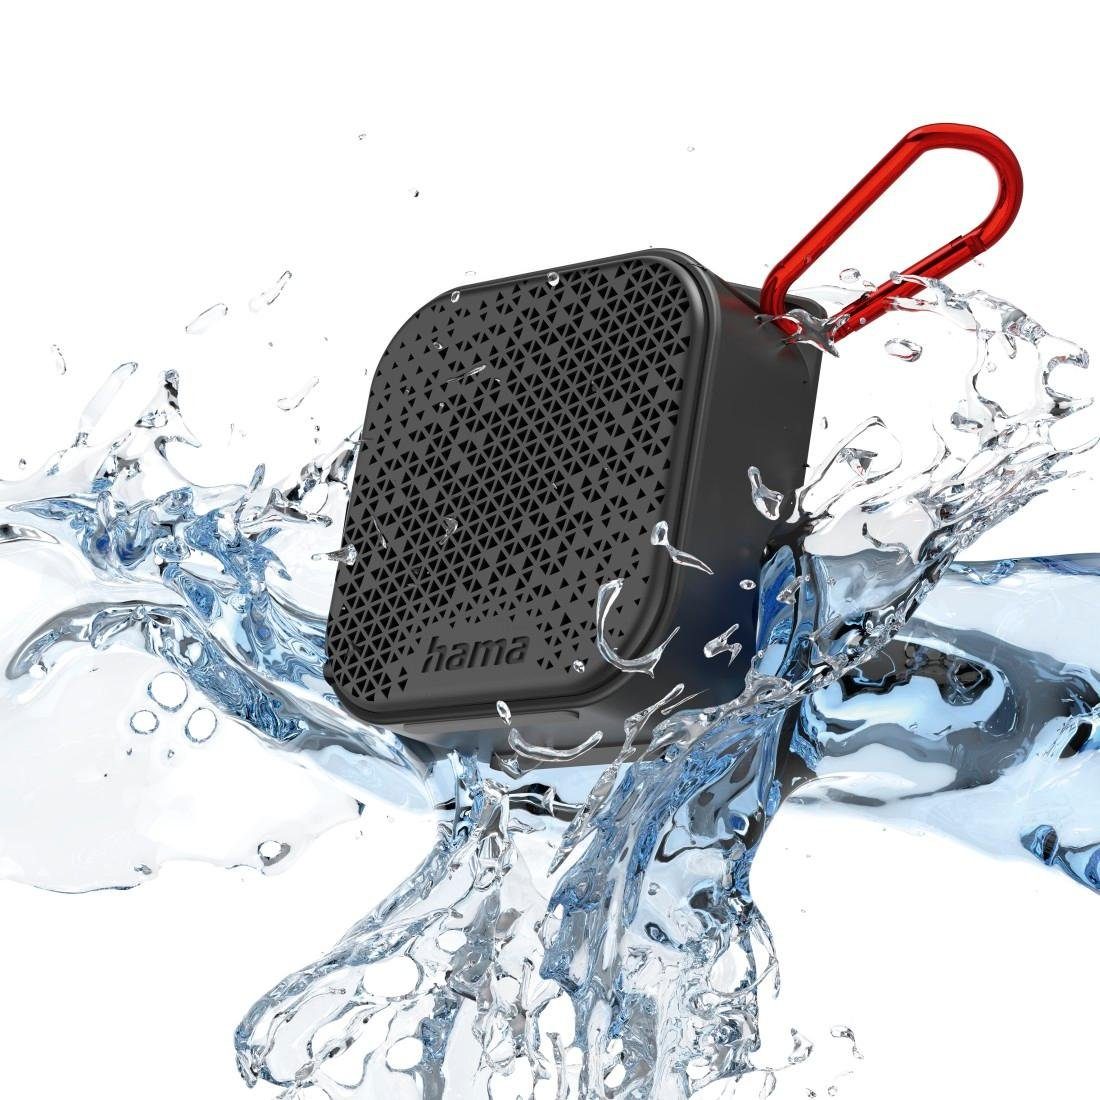 Hama Bluetooth Lautsprecher kabellos wasserdicht IPX7 Outdoor mit Akku Bluetooth-Lautsprecher (3,5 W) schwarz | Lautsprecher